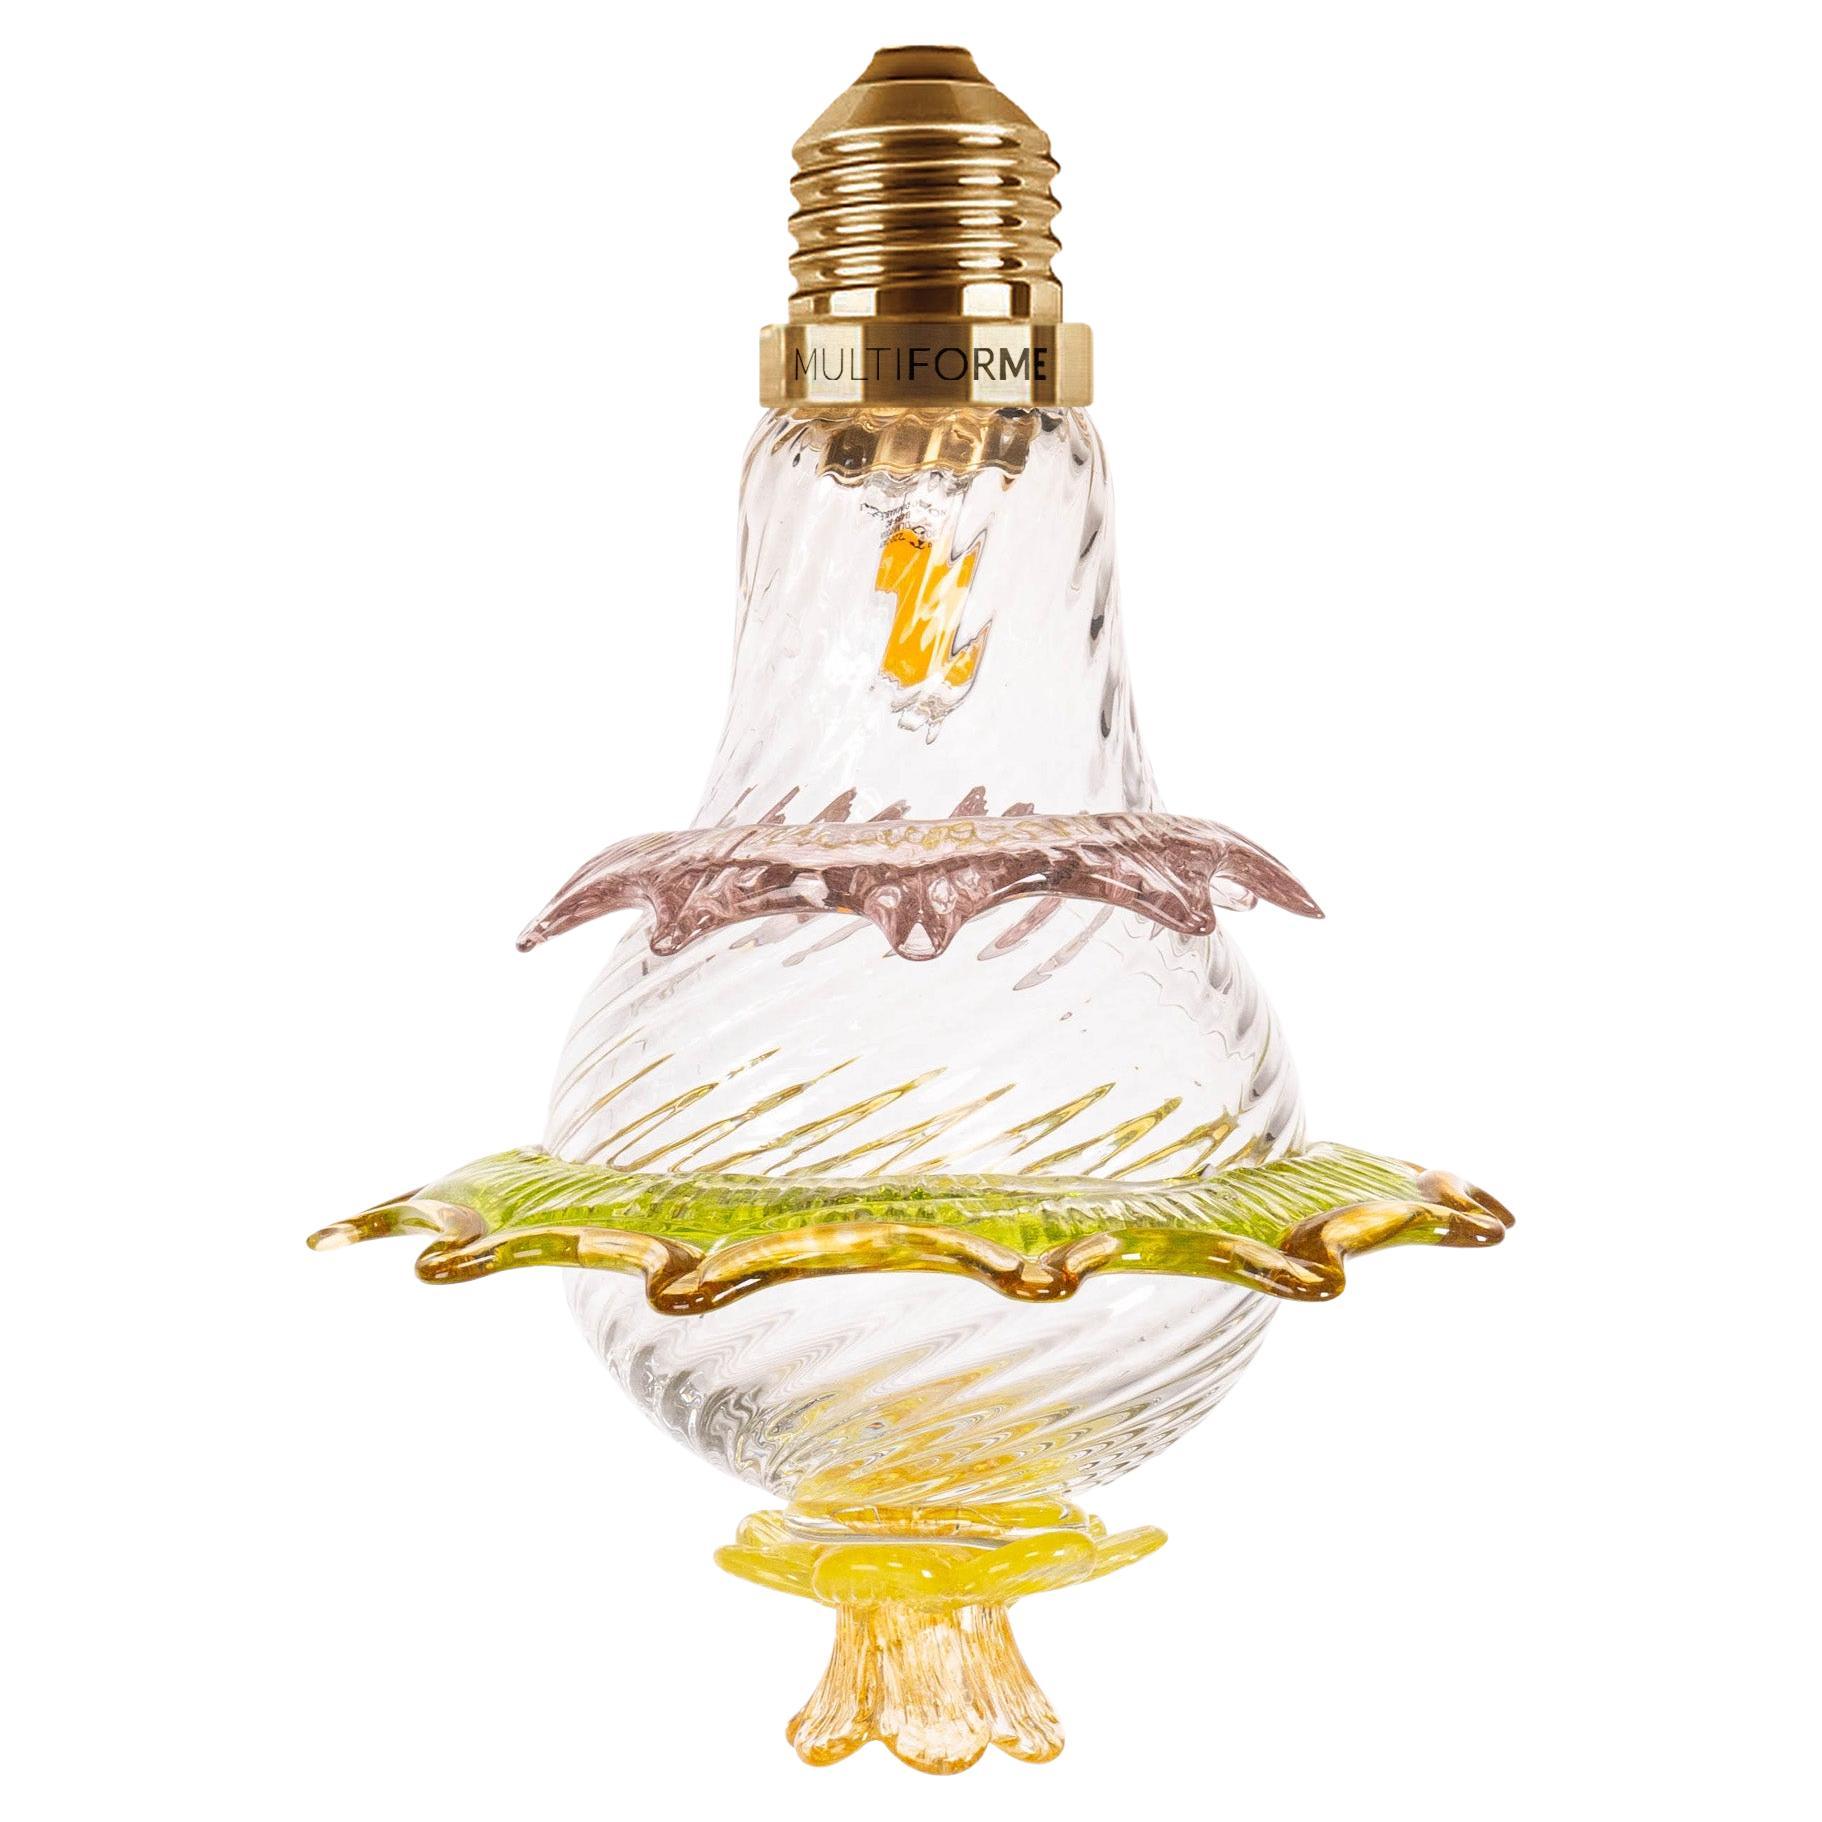 Artistic glass lightbulb chandelier Murano Bulb Marcantonio X Multiforme #04